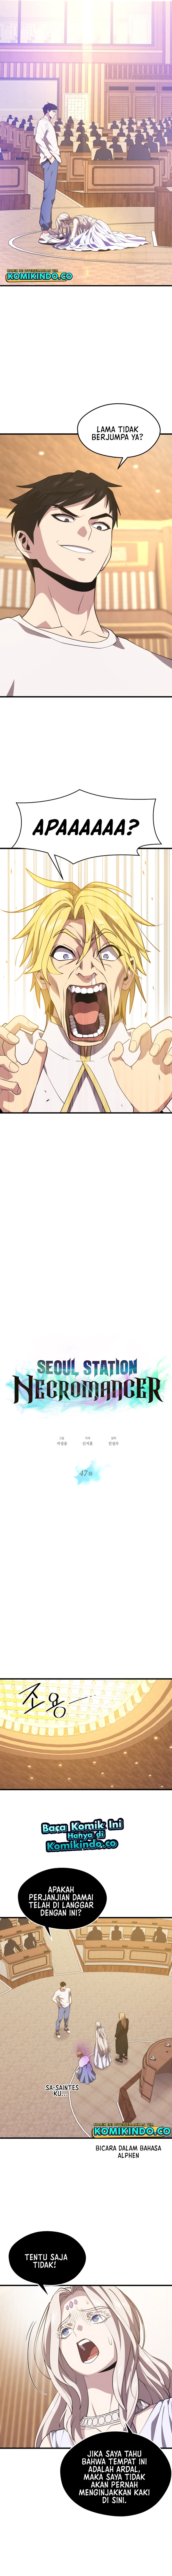 Seoul Station Necromancer Chapter 47